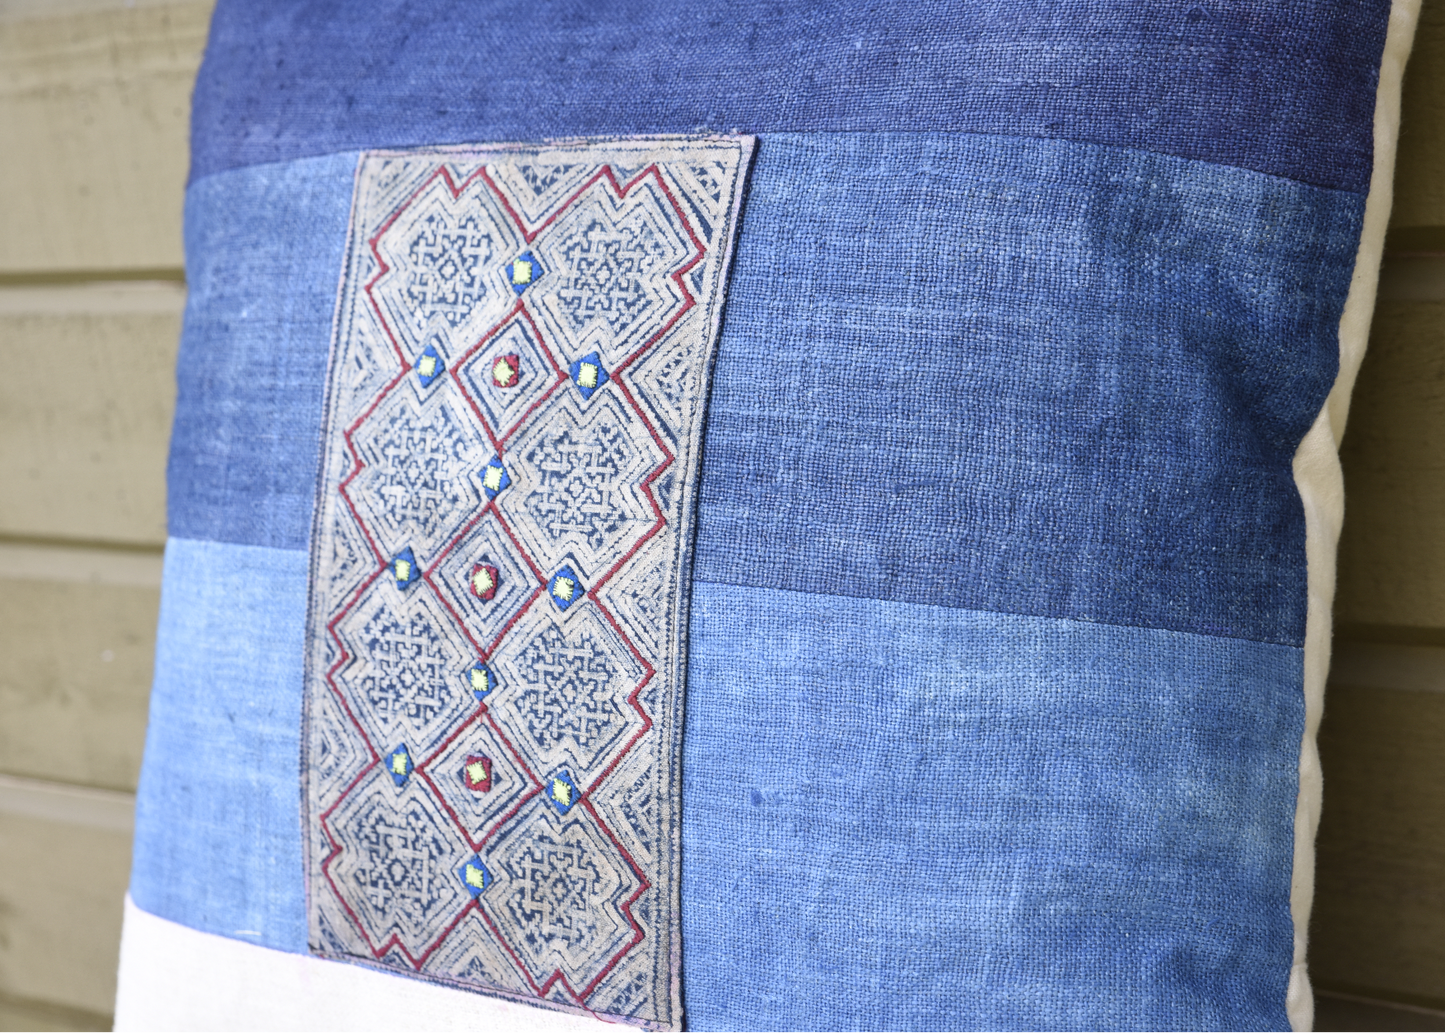 Indigo Hemp Cushion Cover, H'mong batik pattern